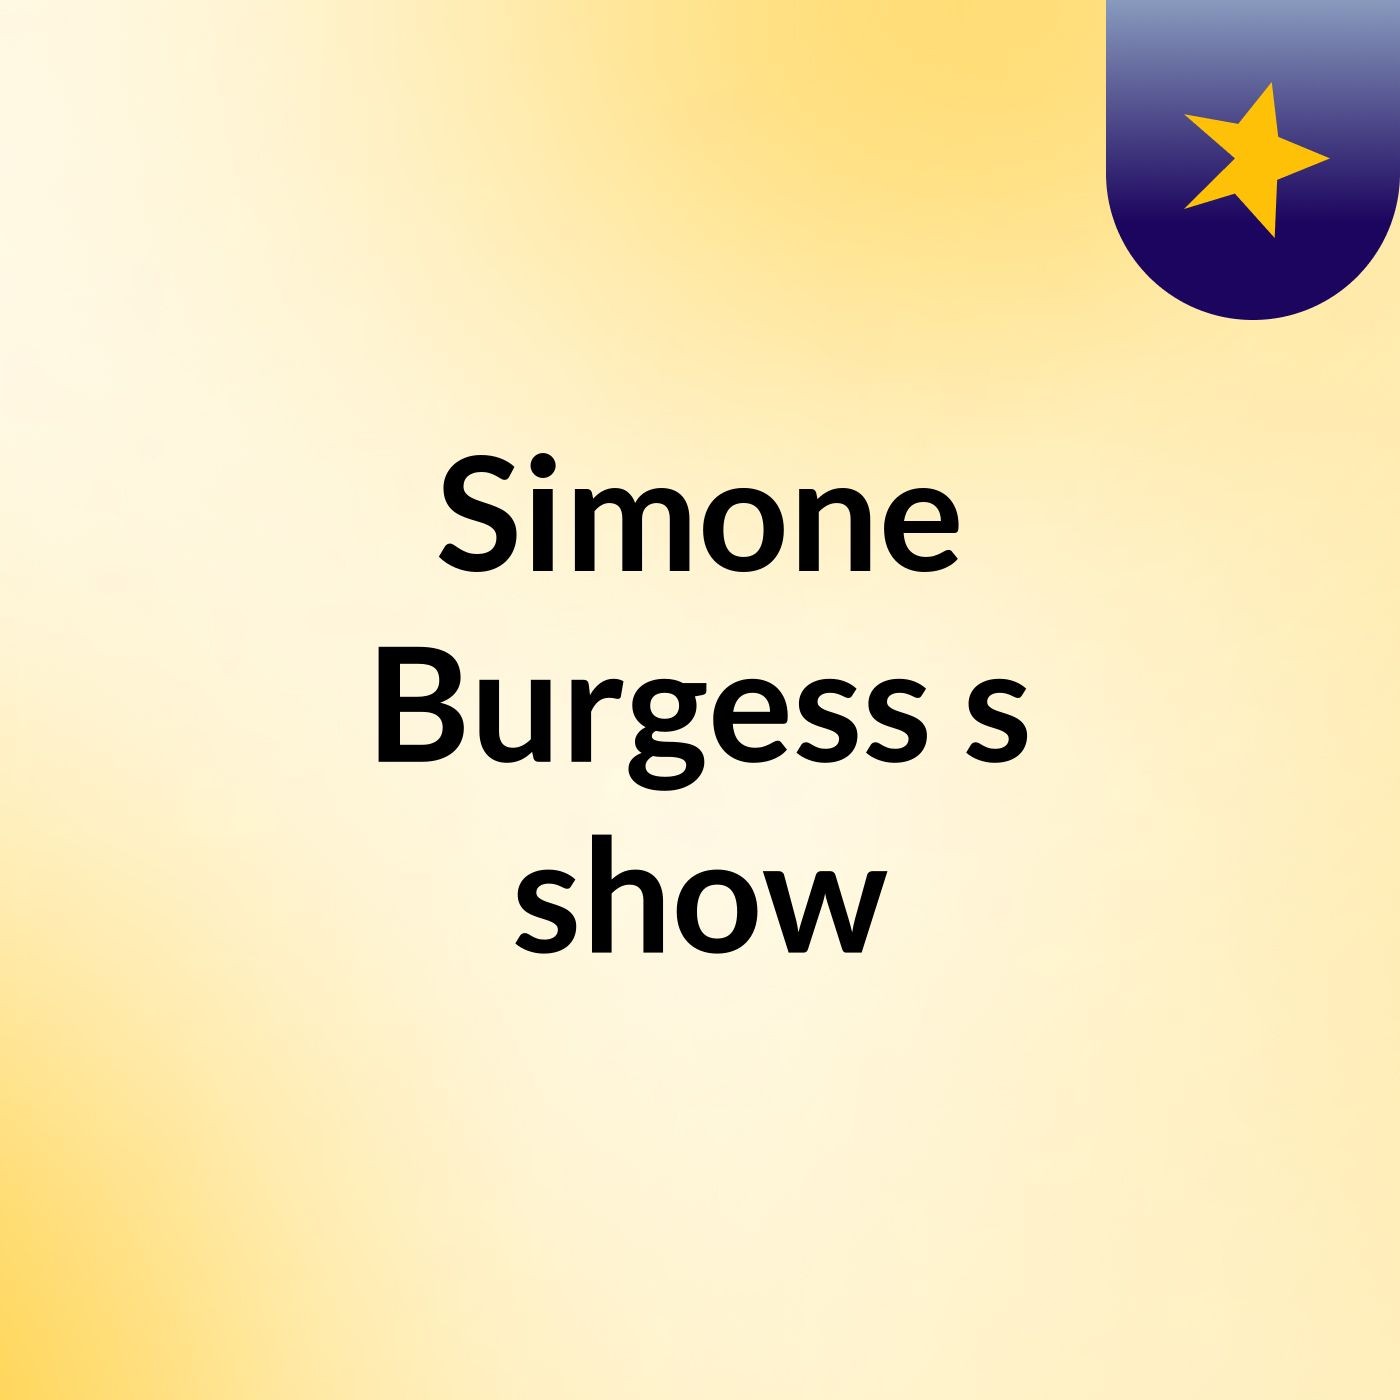 Simone Burgess's show